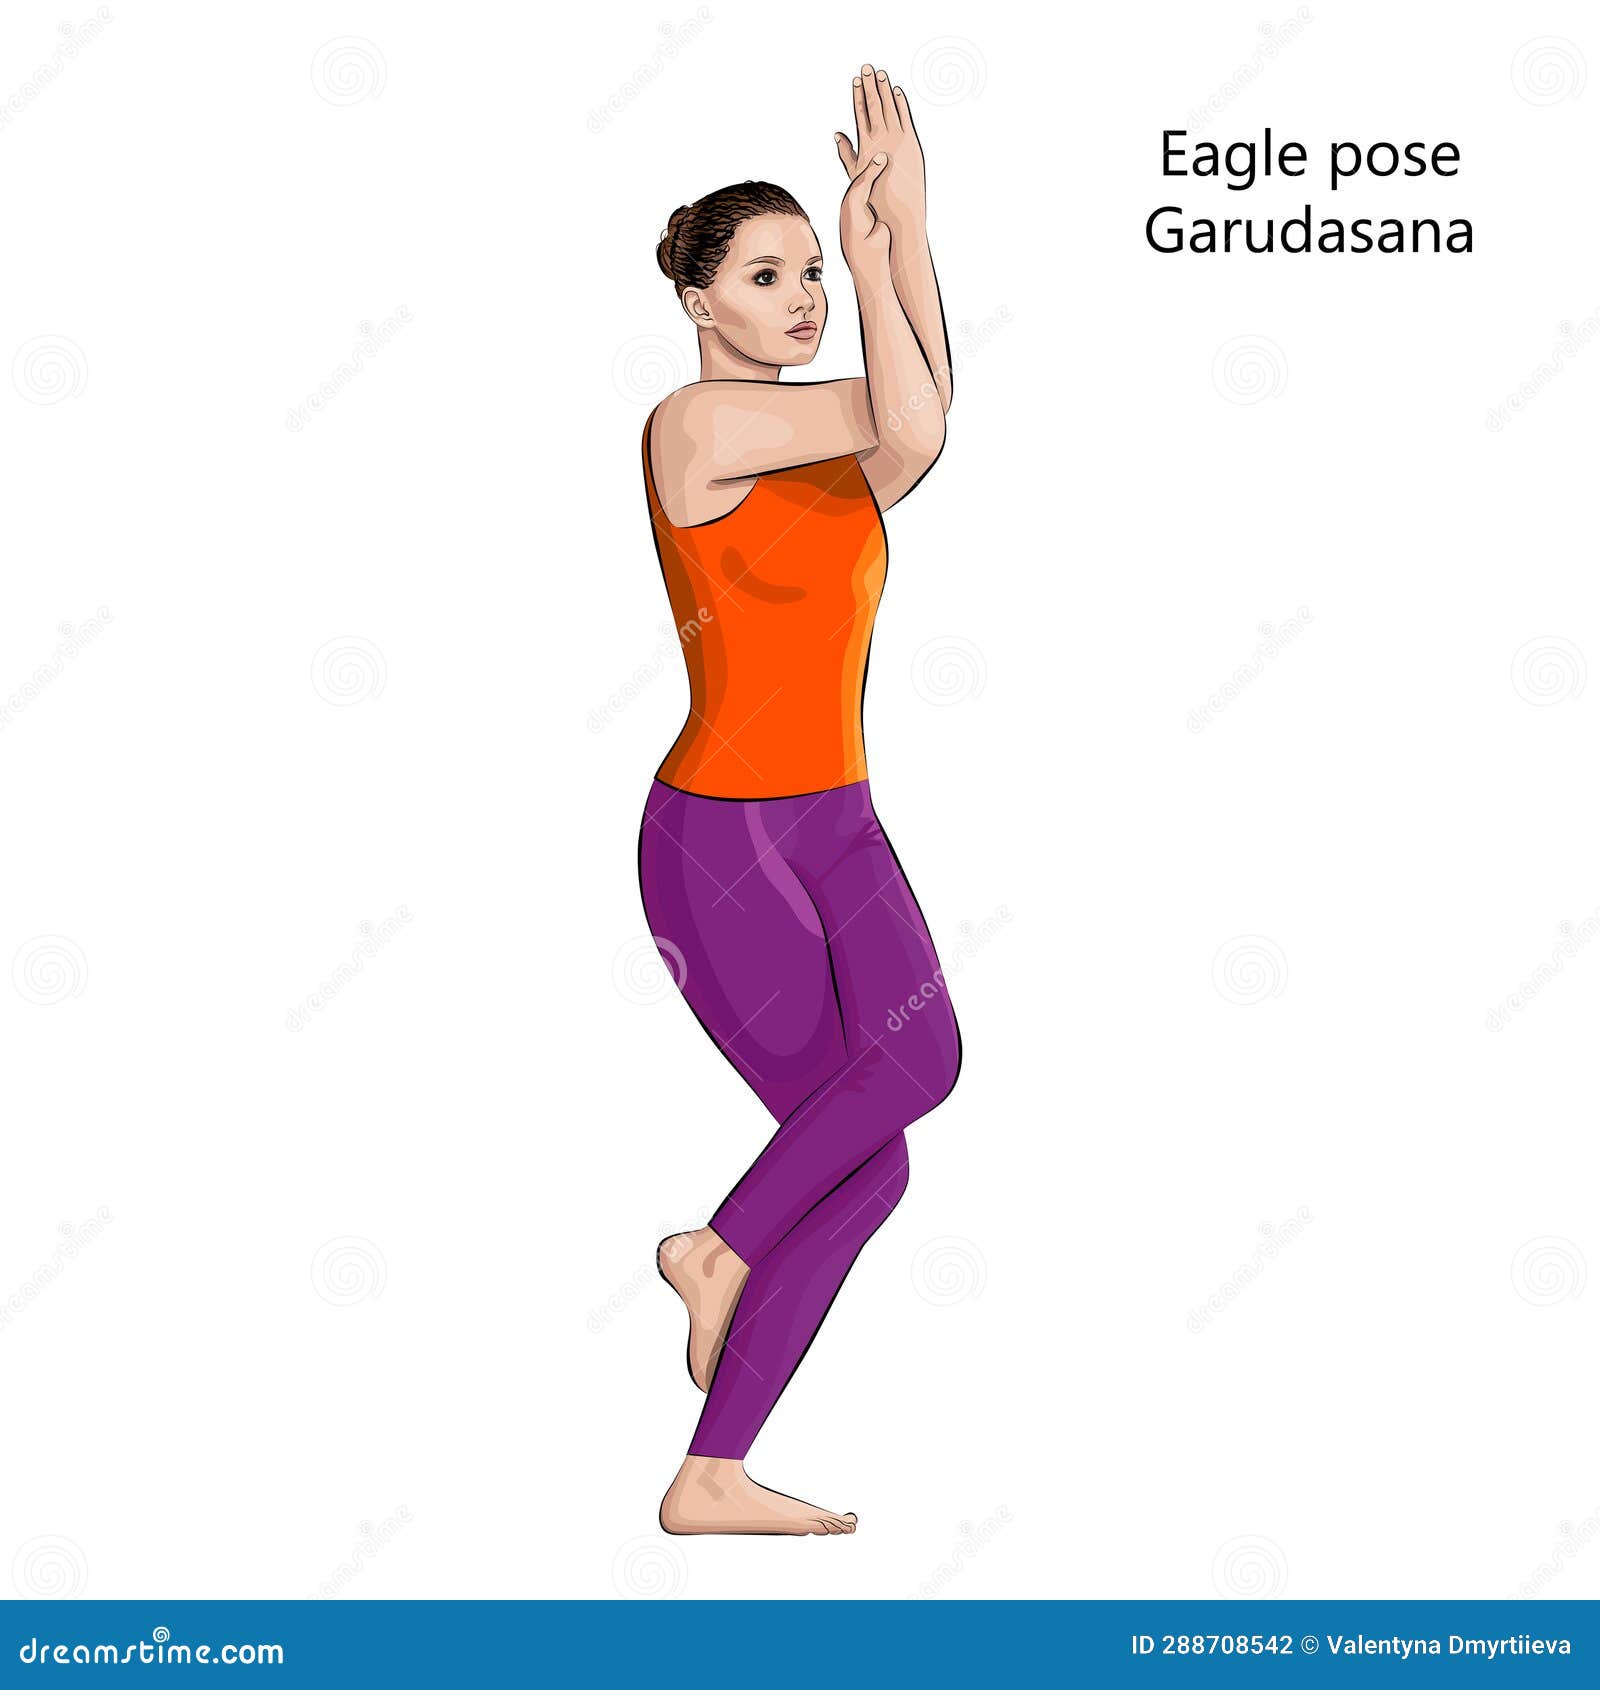 5 Fun Ways to Spice Up Eagle Pose - YogaUOnline